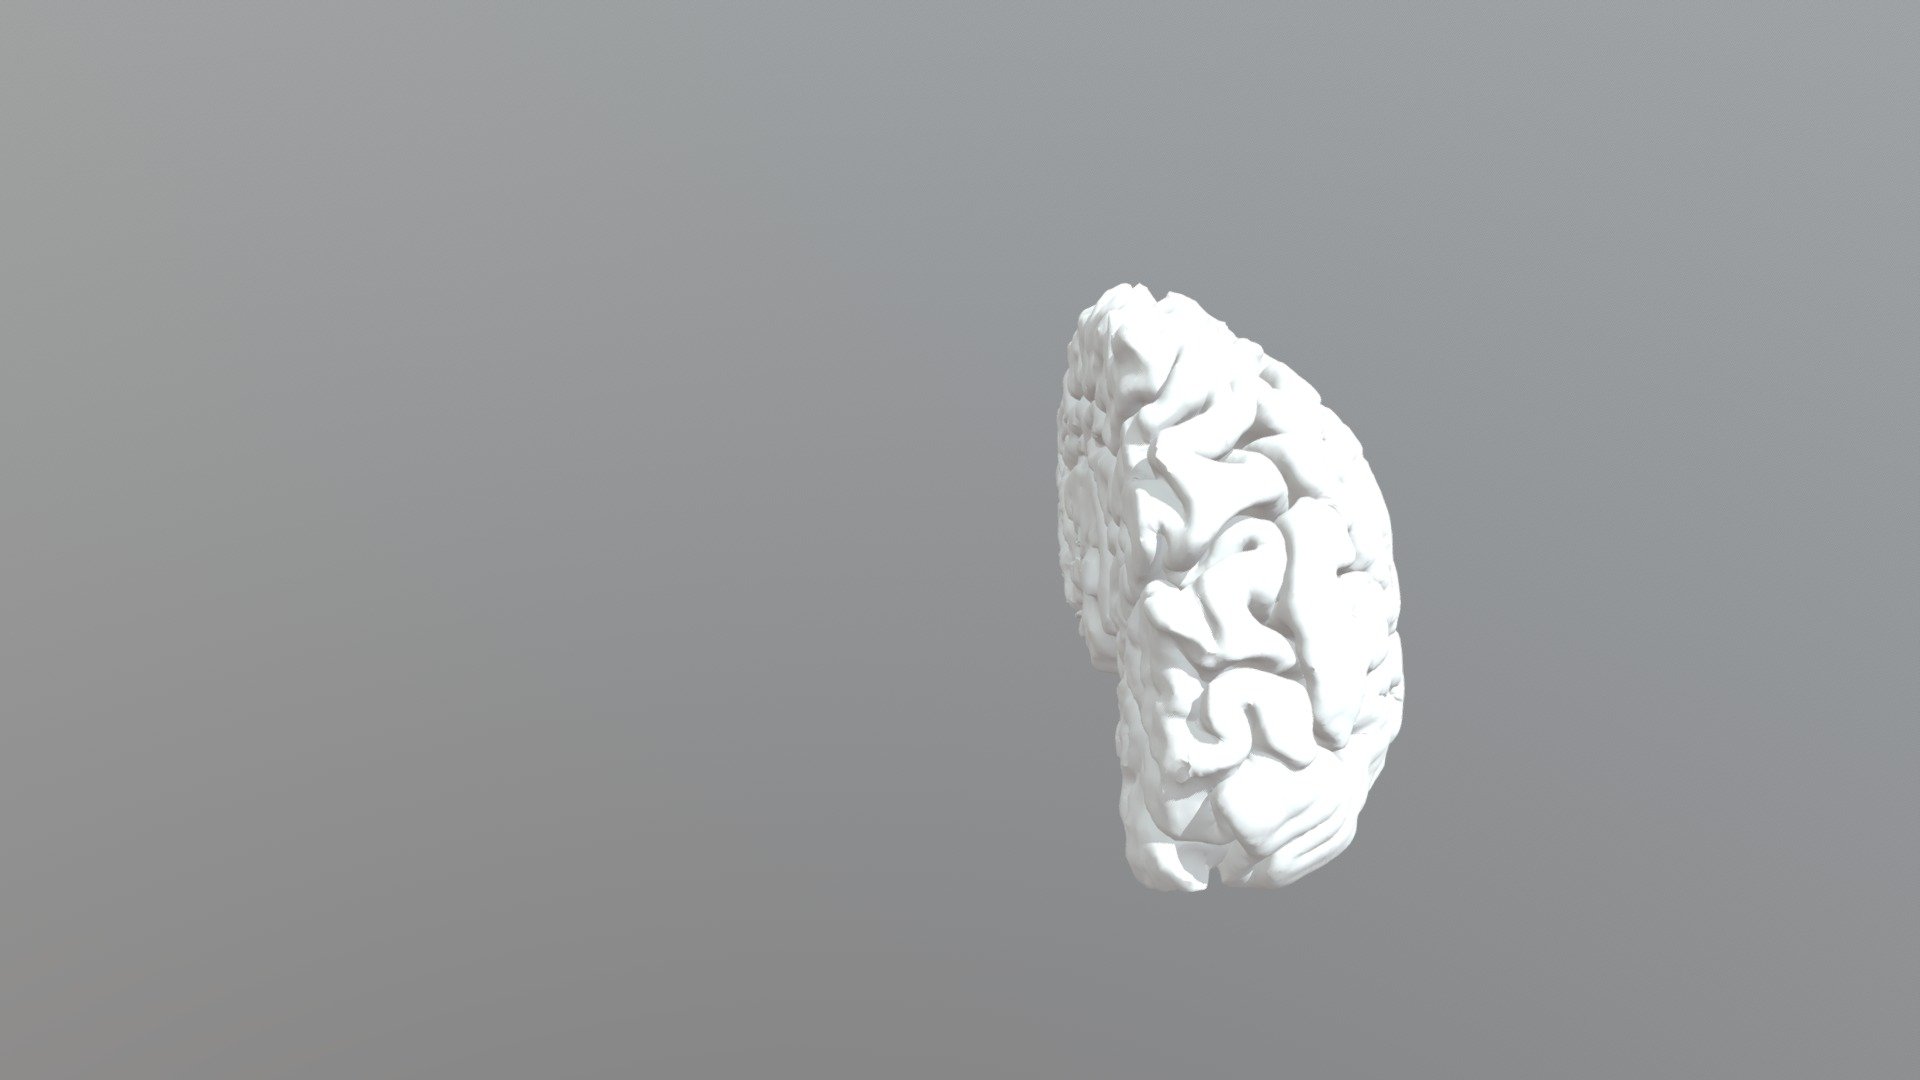 Human Brain (Right Half)